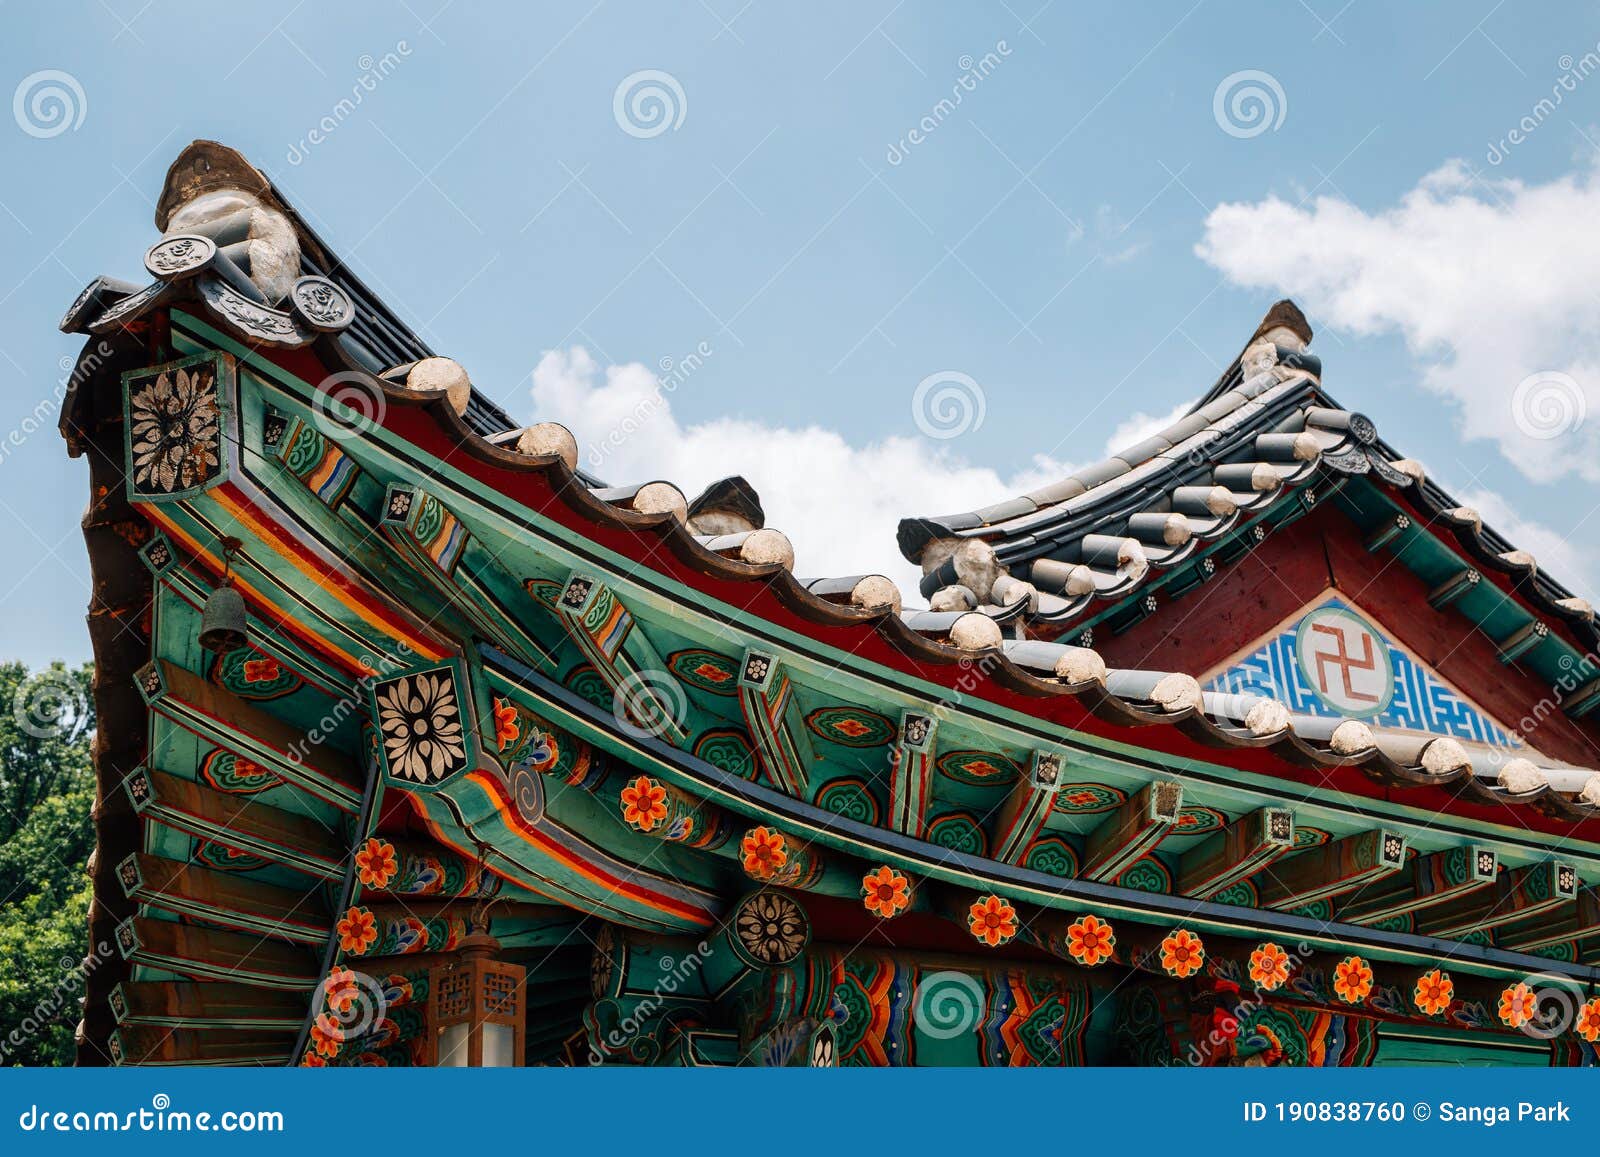  Korean  Traditional  Roof At Bongeunsa Temple In Seoul Korea  Editorial Image Image of asia 